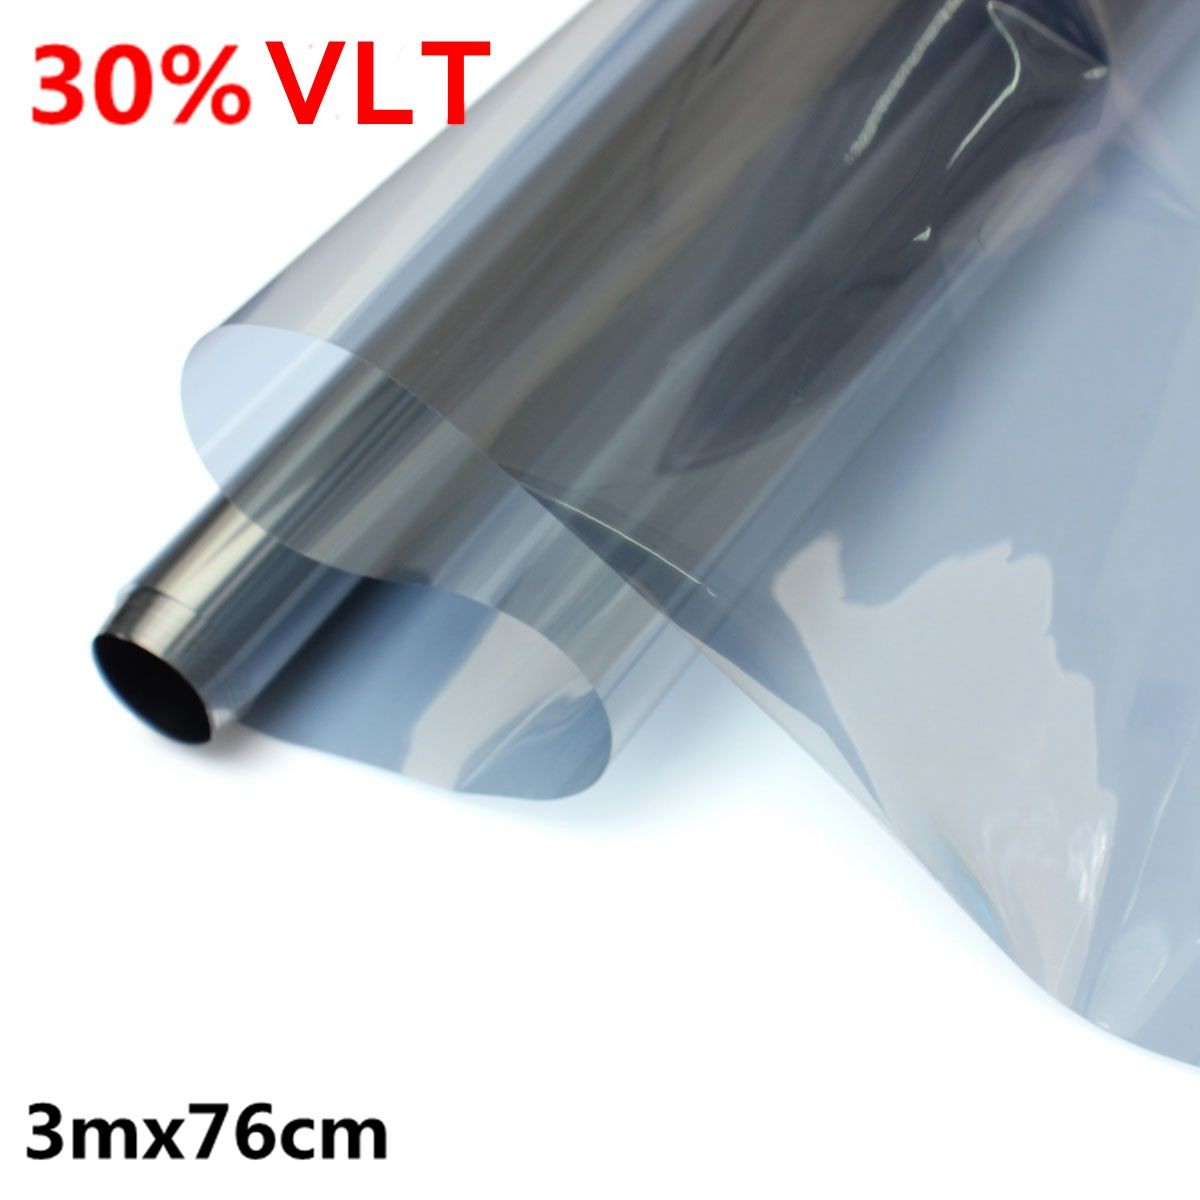 Dim Gray 15% 30% 3mx76cm LVT Car Auto Window Glass Tint Film Tinting Roll Silver Mirror